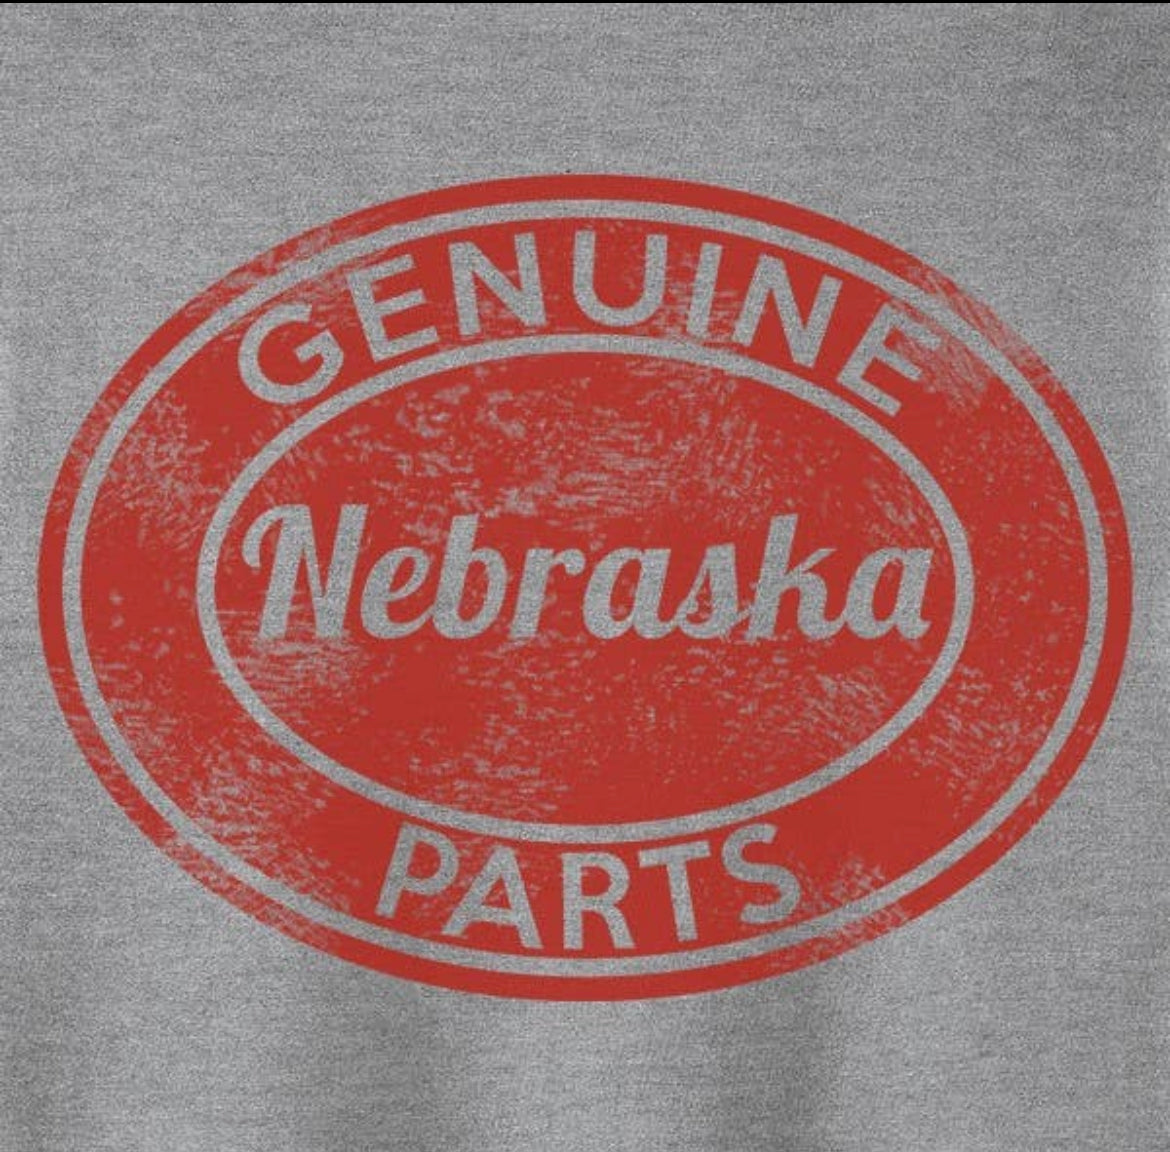 Genuine Nebraska Parts Tee